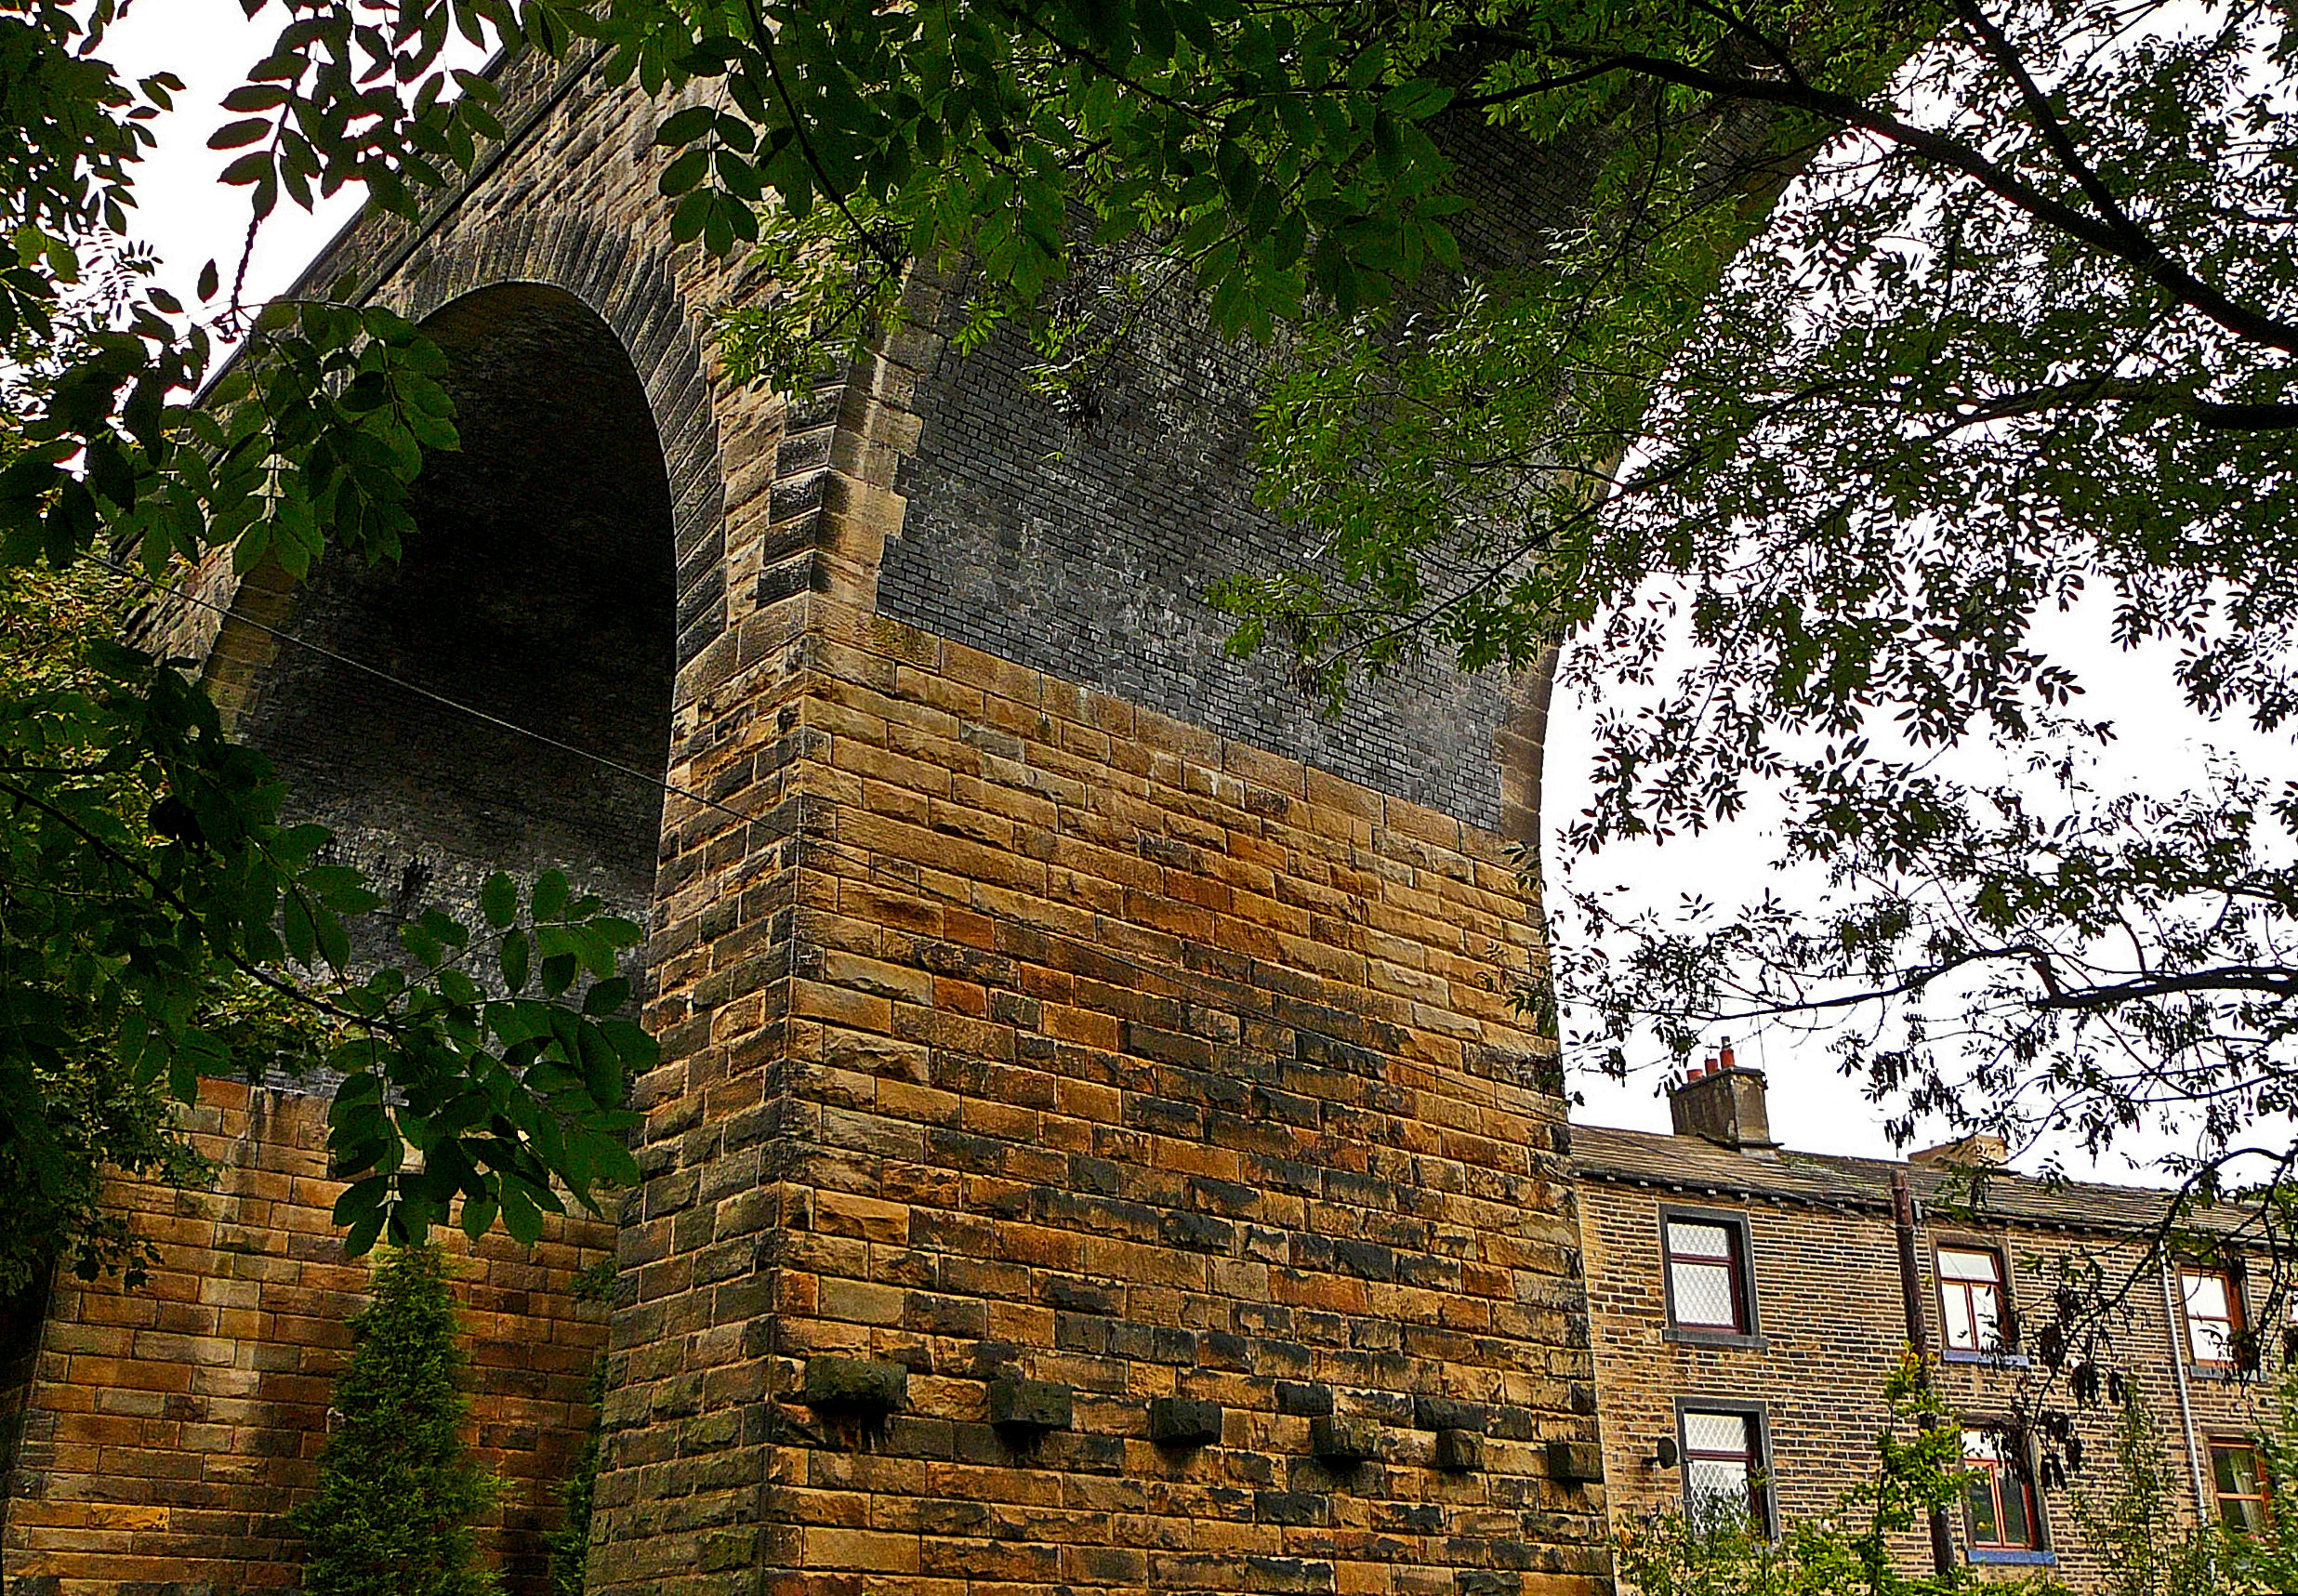 Wheatley Viaduct